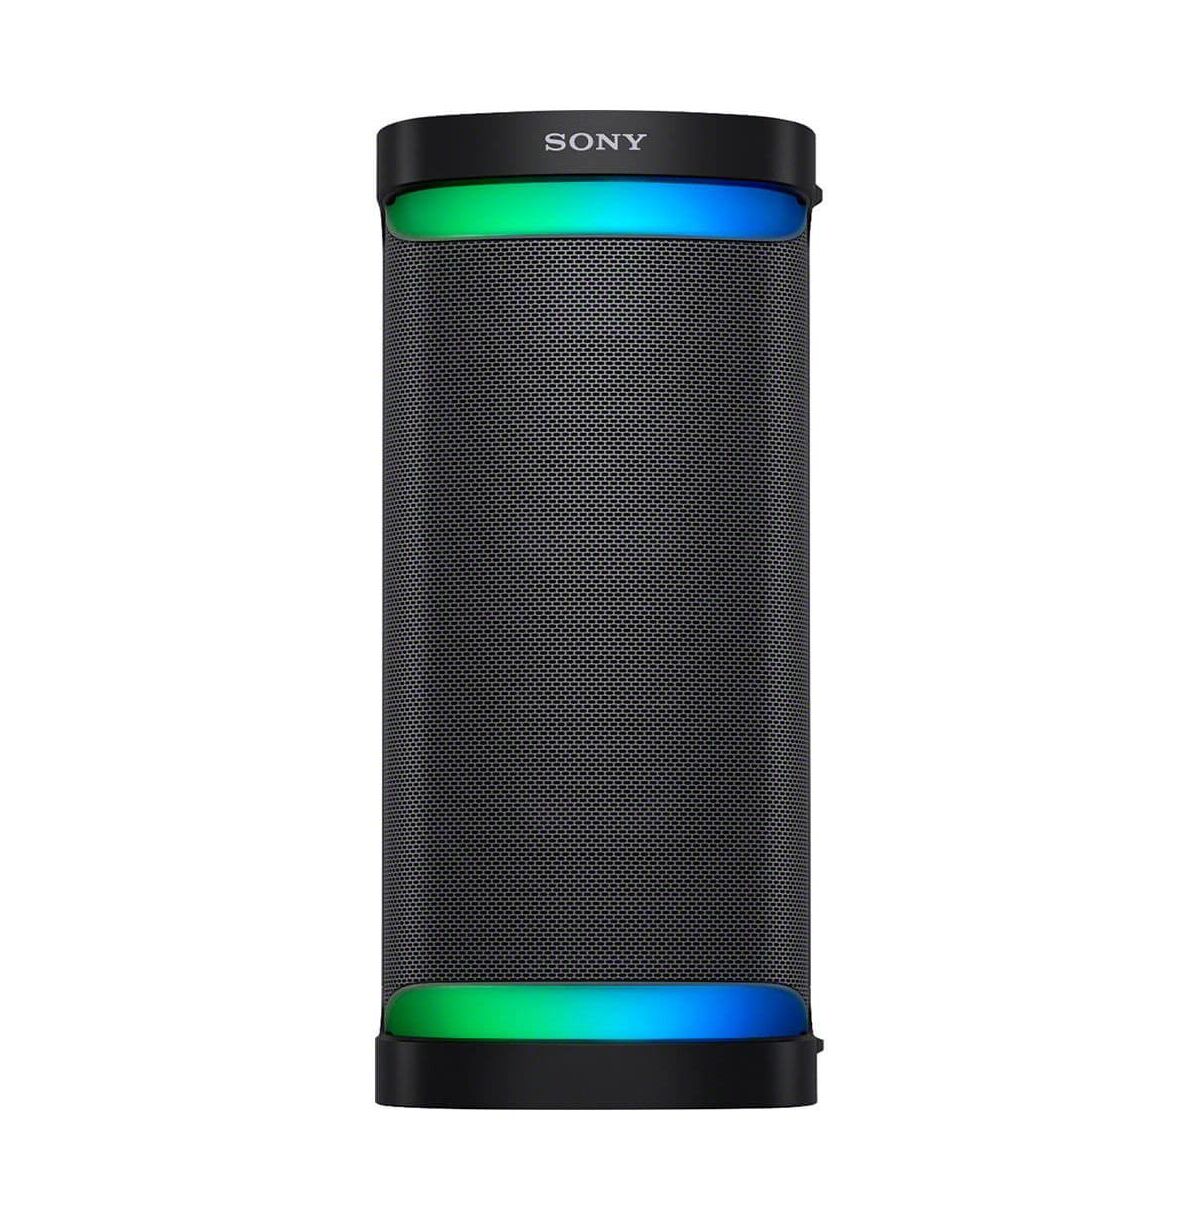 Sony Bluetooth Portable Wireless Speaker - Black - Black